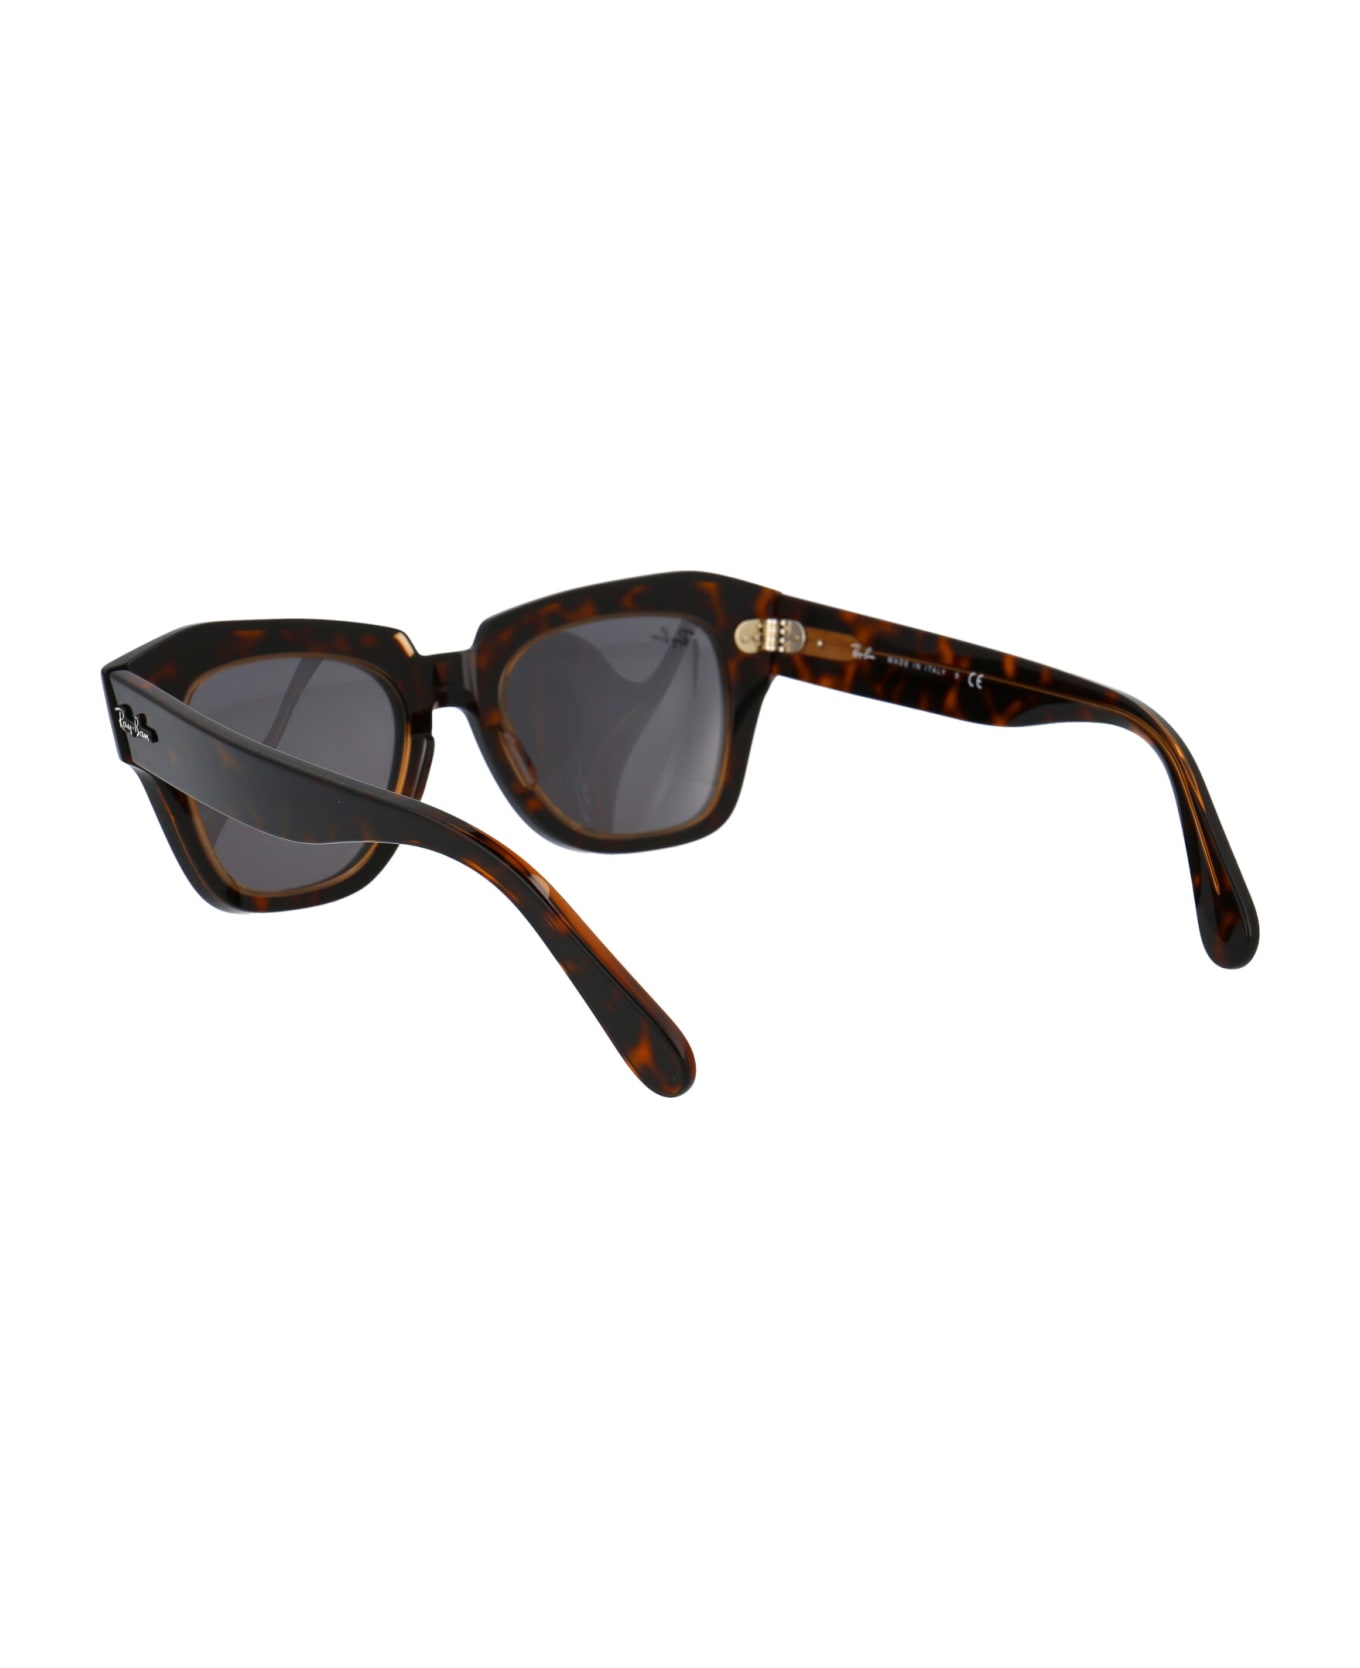 Ray-Ban State Street Sunglasses - 1292B1 HAVANA ON TRANSPARENT BROWN